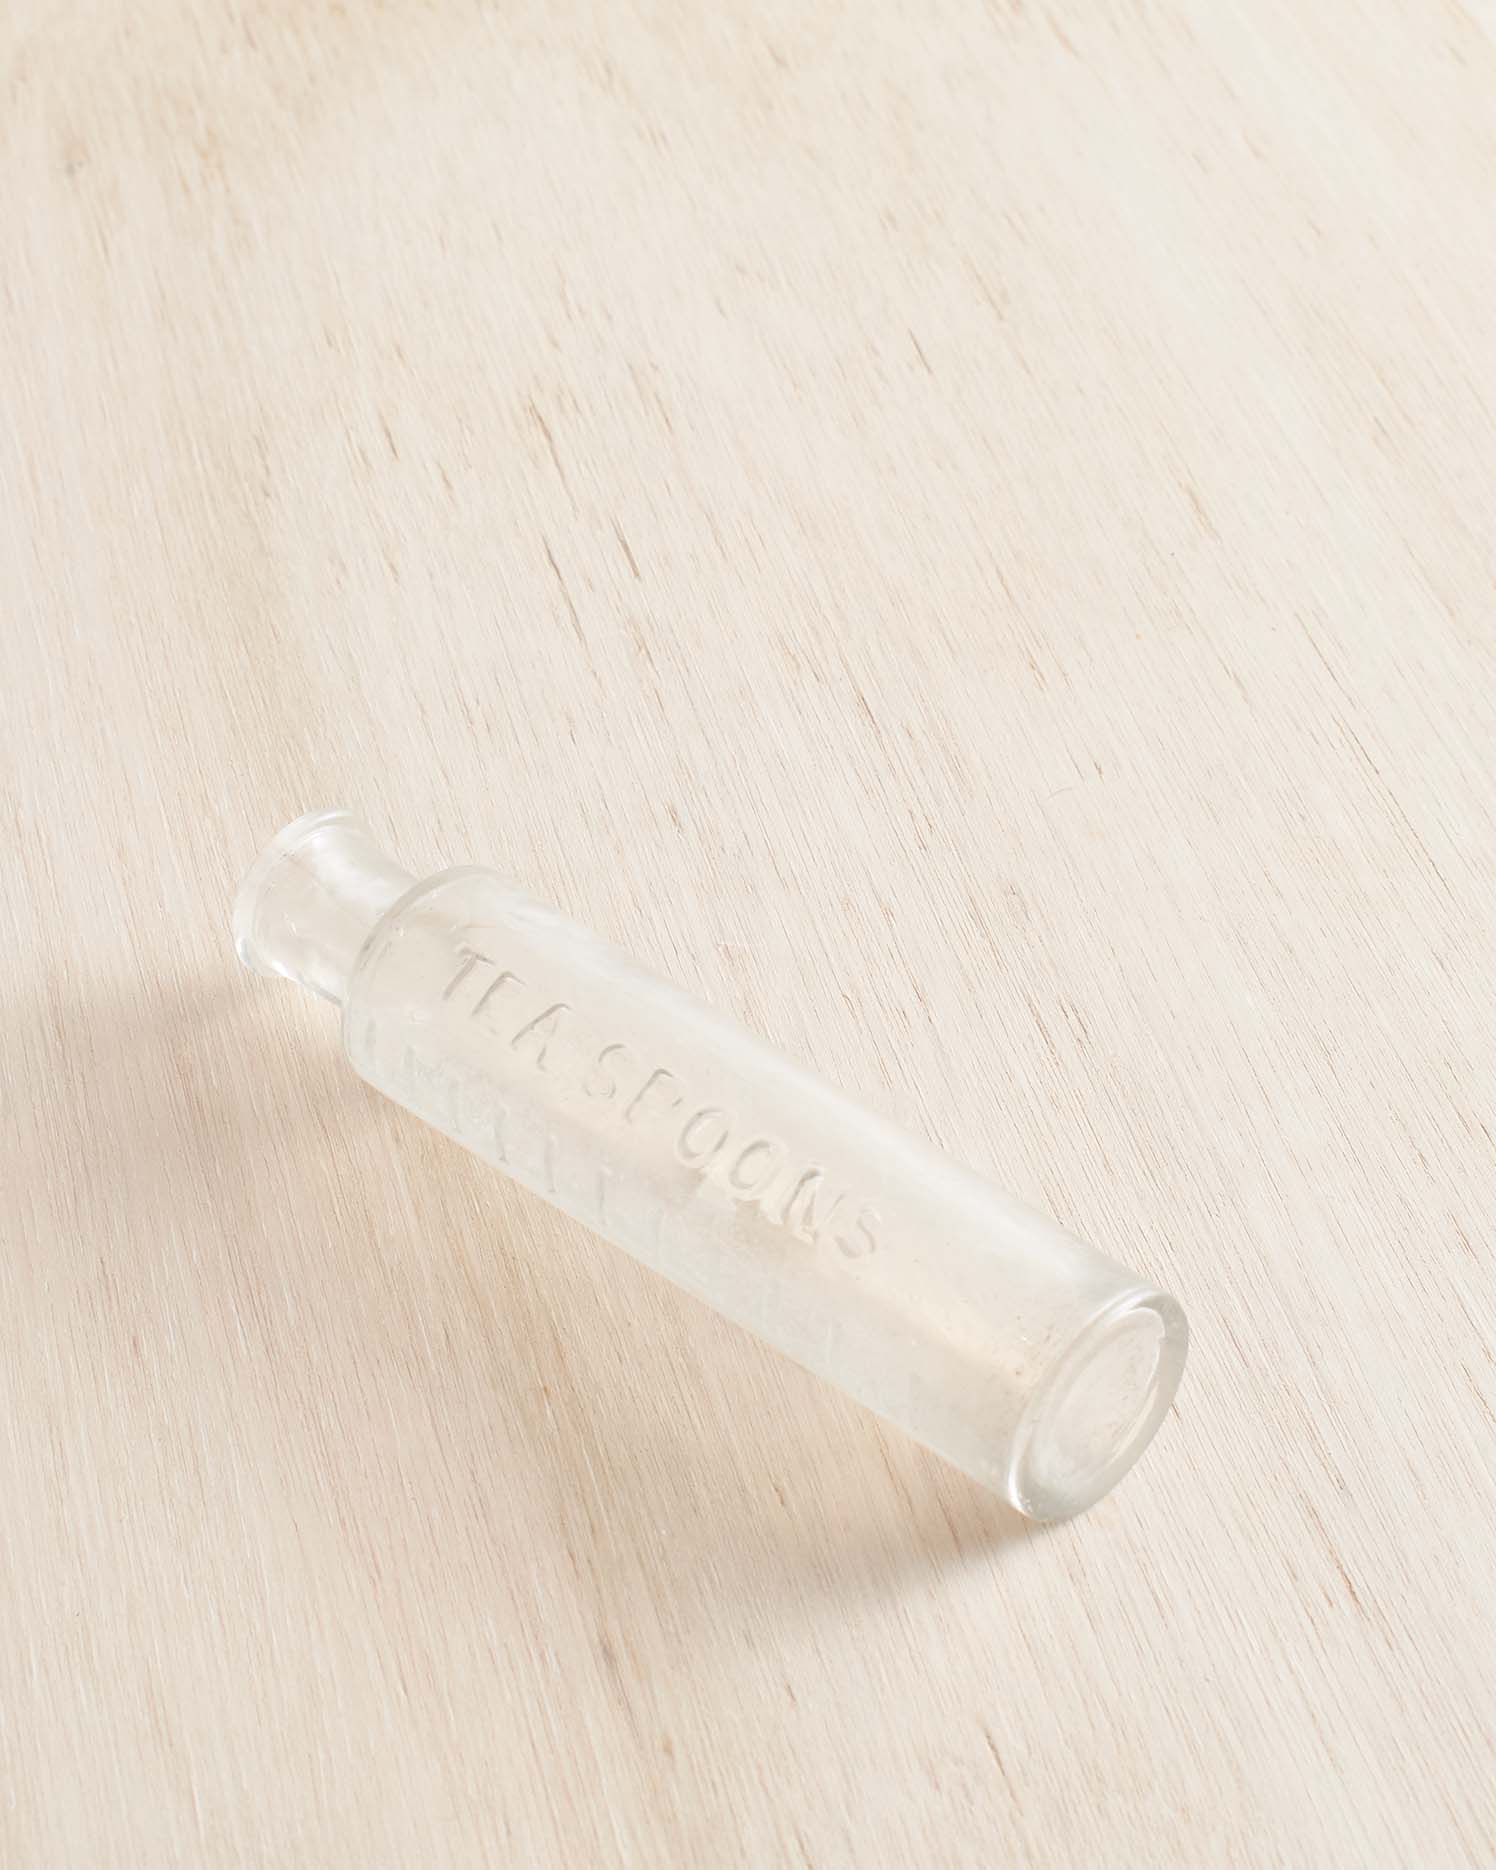 Vintage Extra Small Cylindrical Glass Bottle Bud Vase